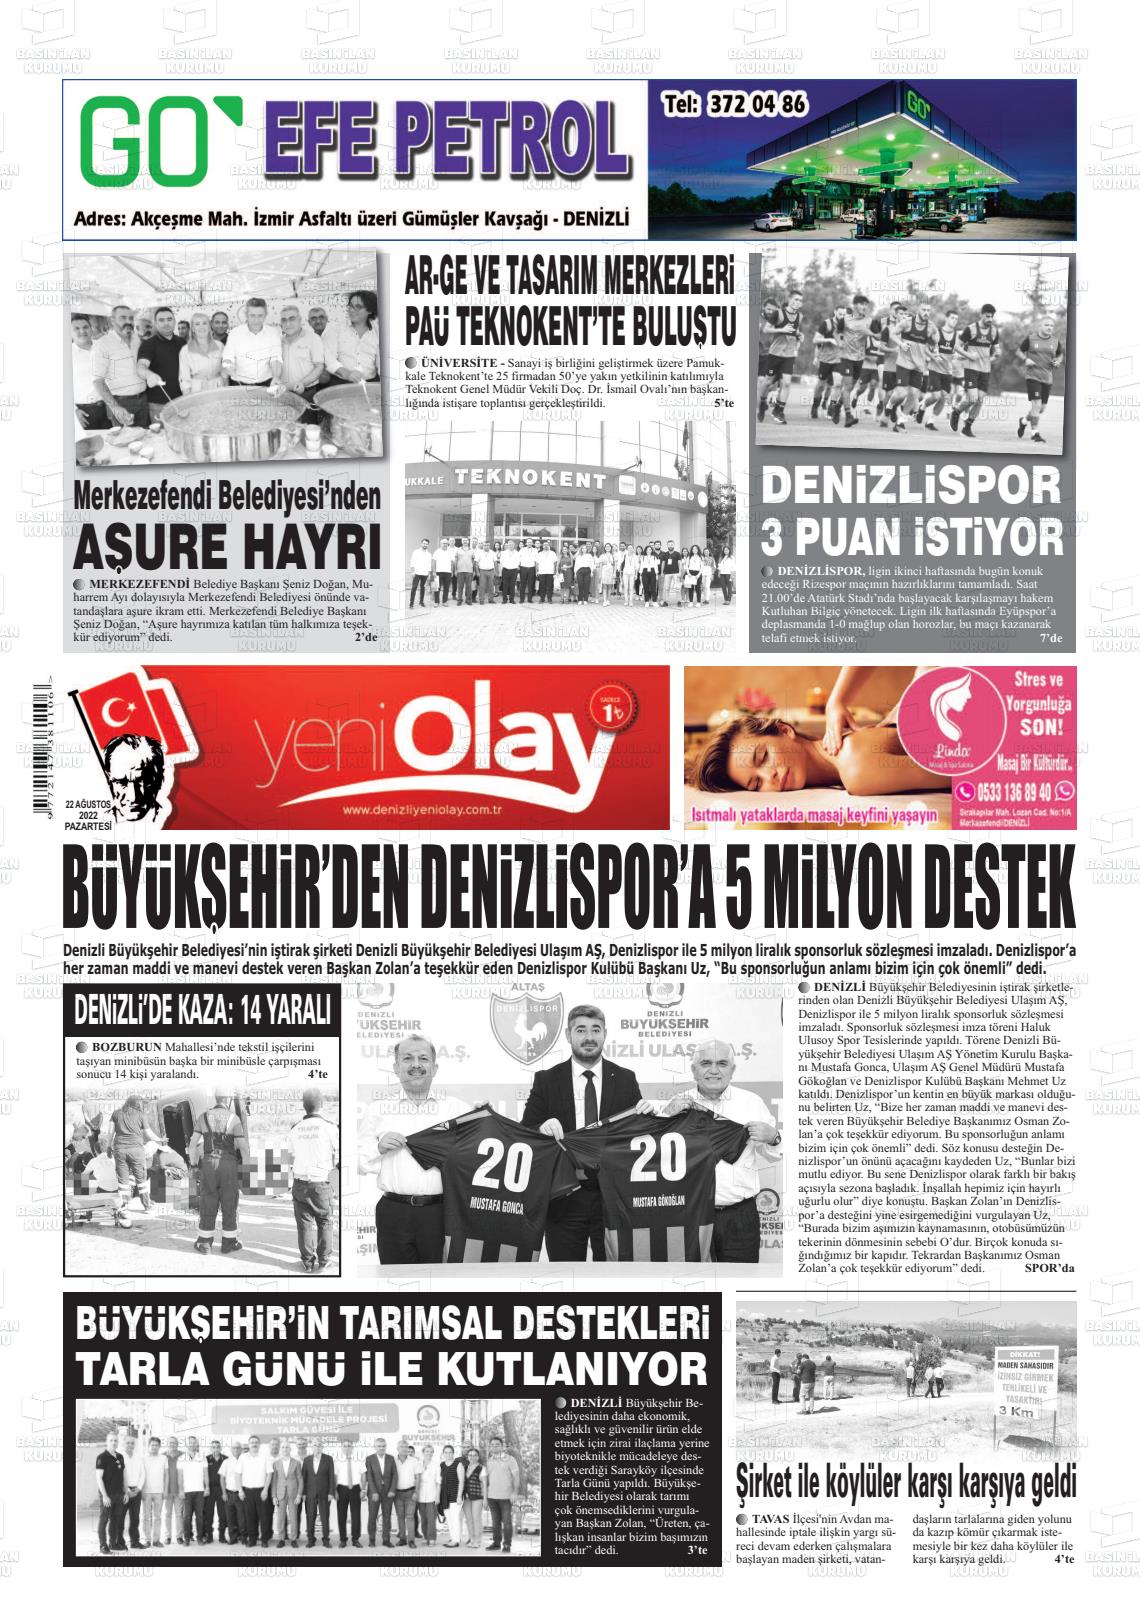 23 Ağustos 2022 Denizli Yeni Olay Gazete Manşeti